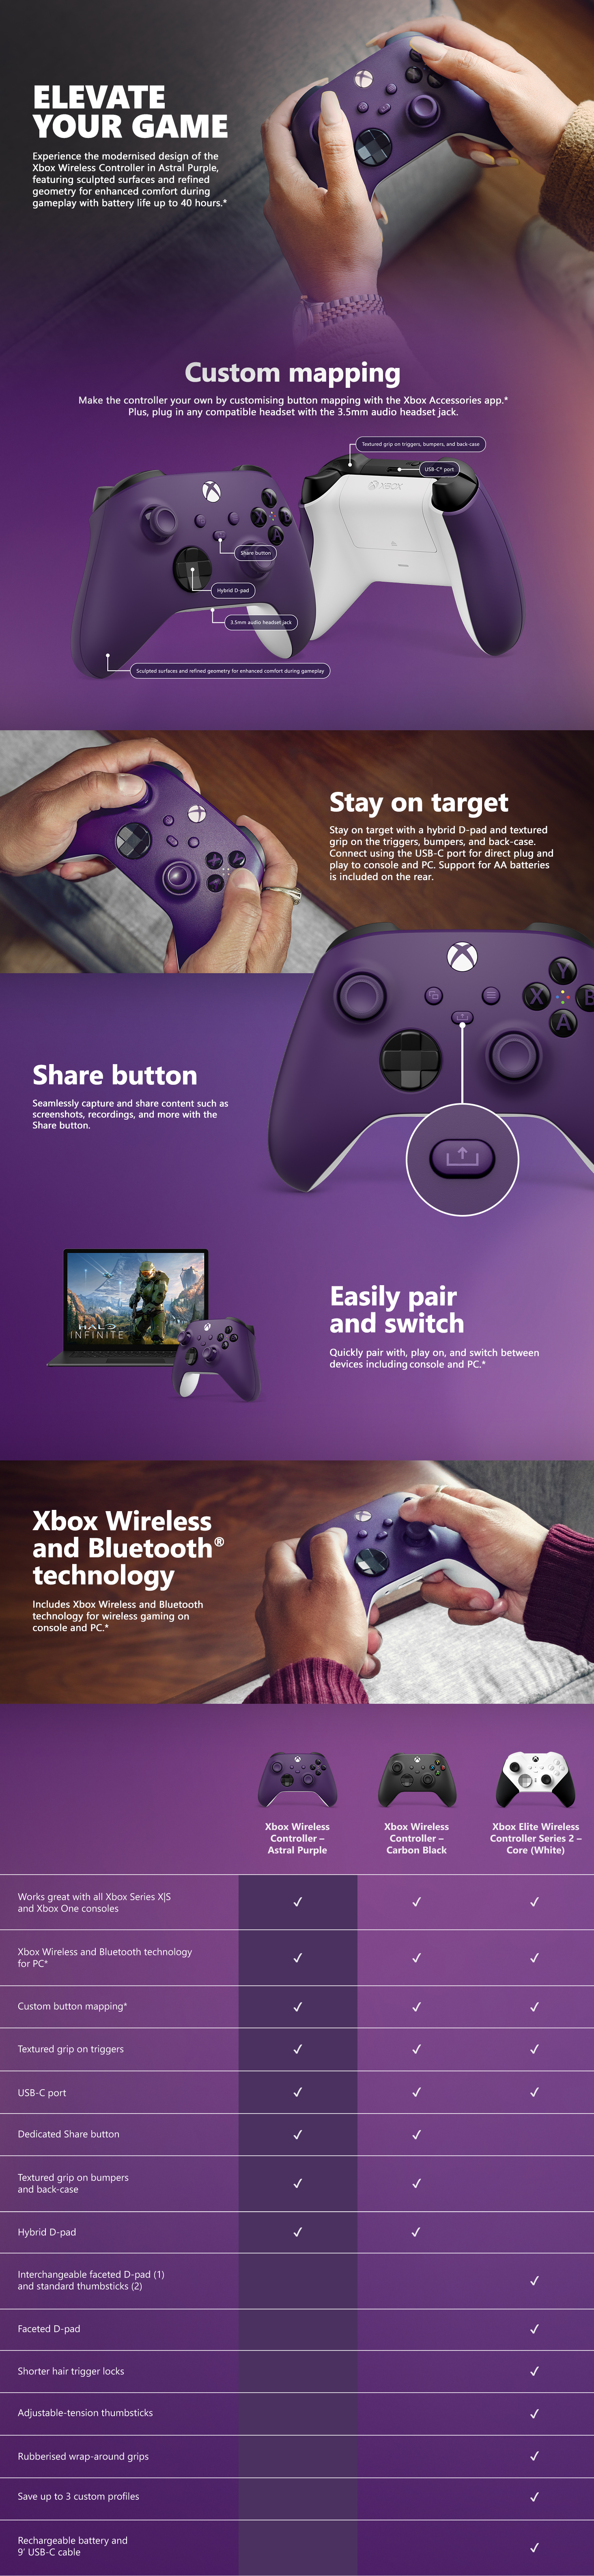 Xbox_Wrls_Cntrl_Astral_Purple_SE_PDP_BestPlus_full